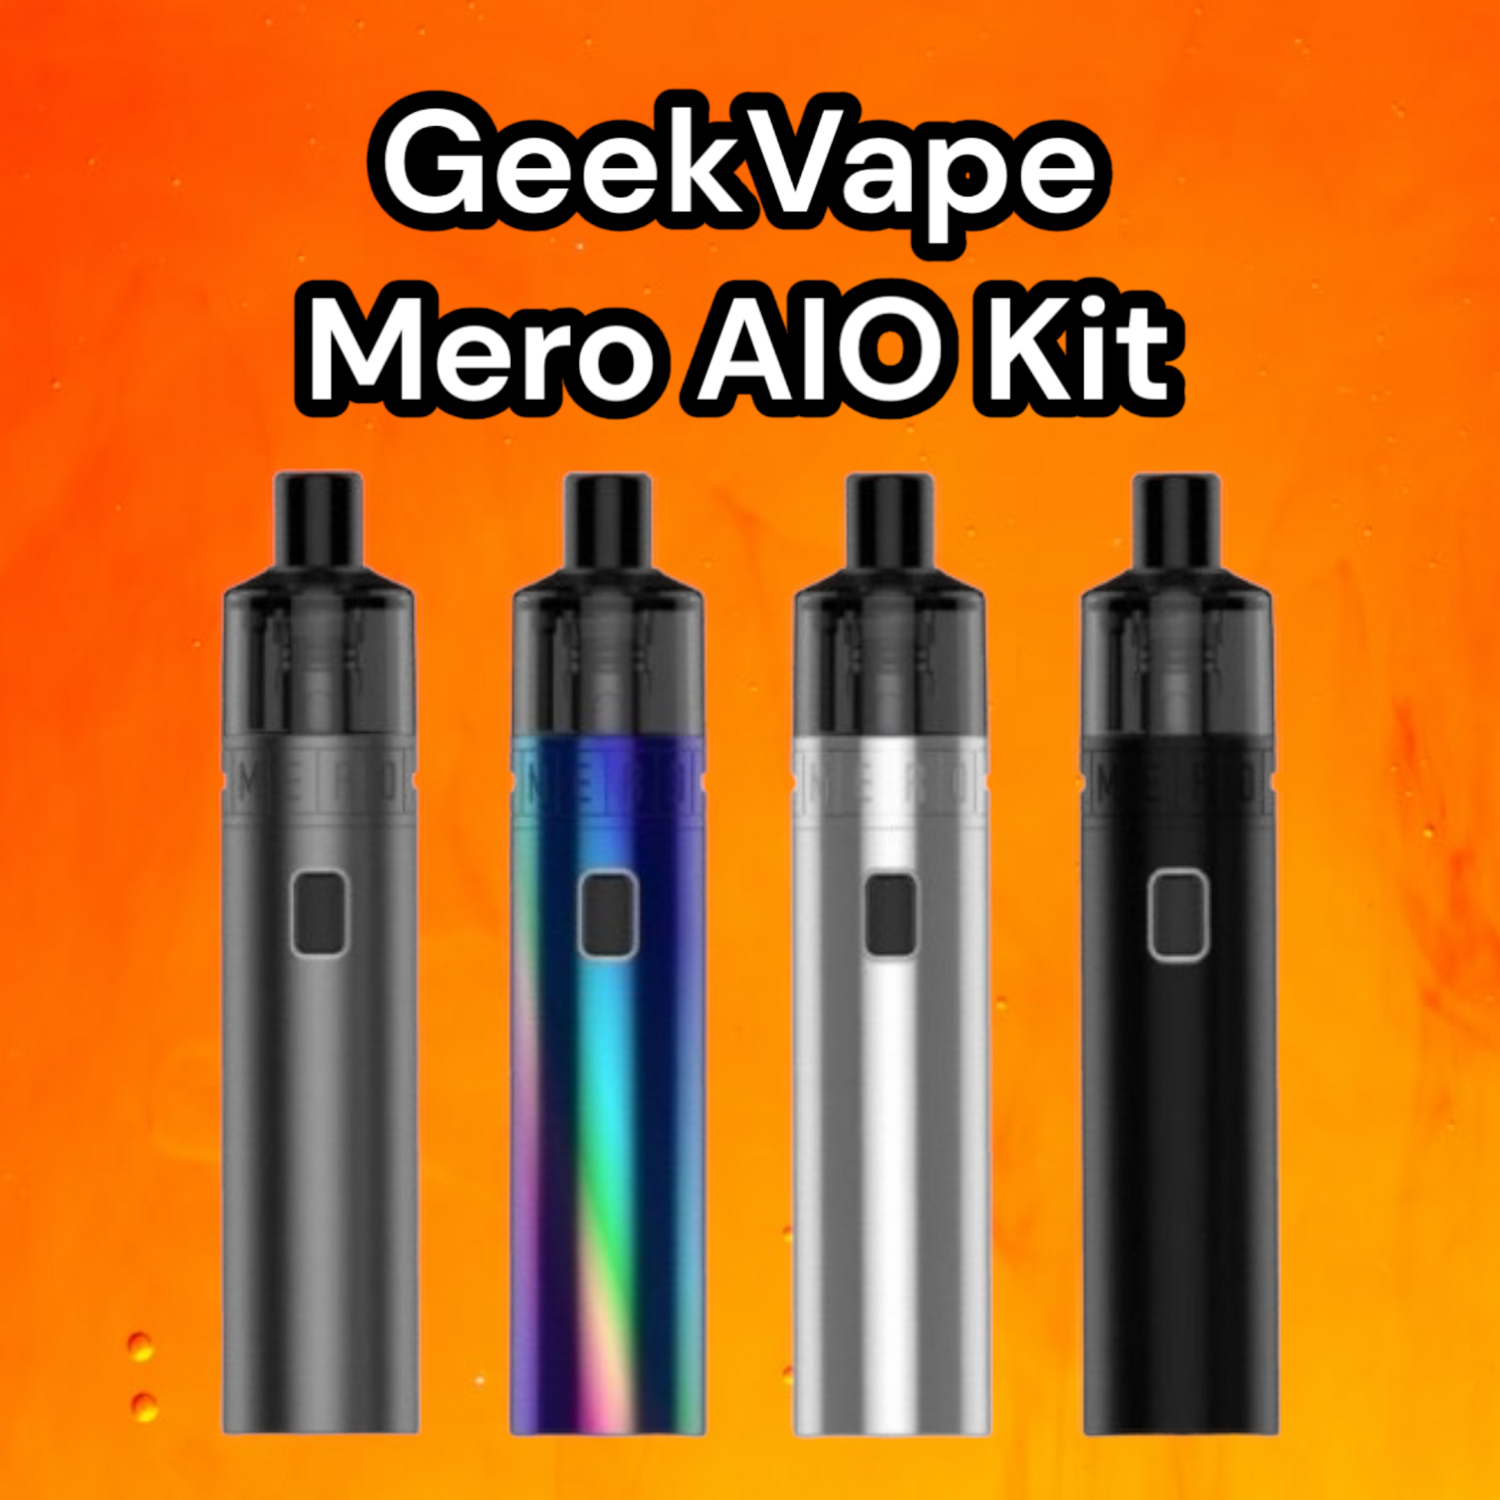 GeekVape Mero AIO Kit